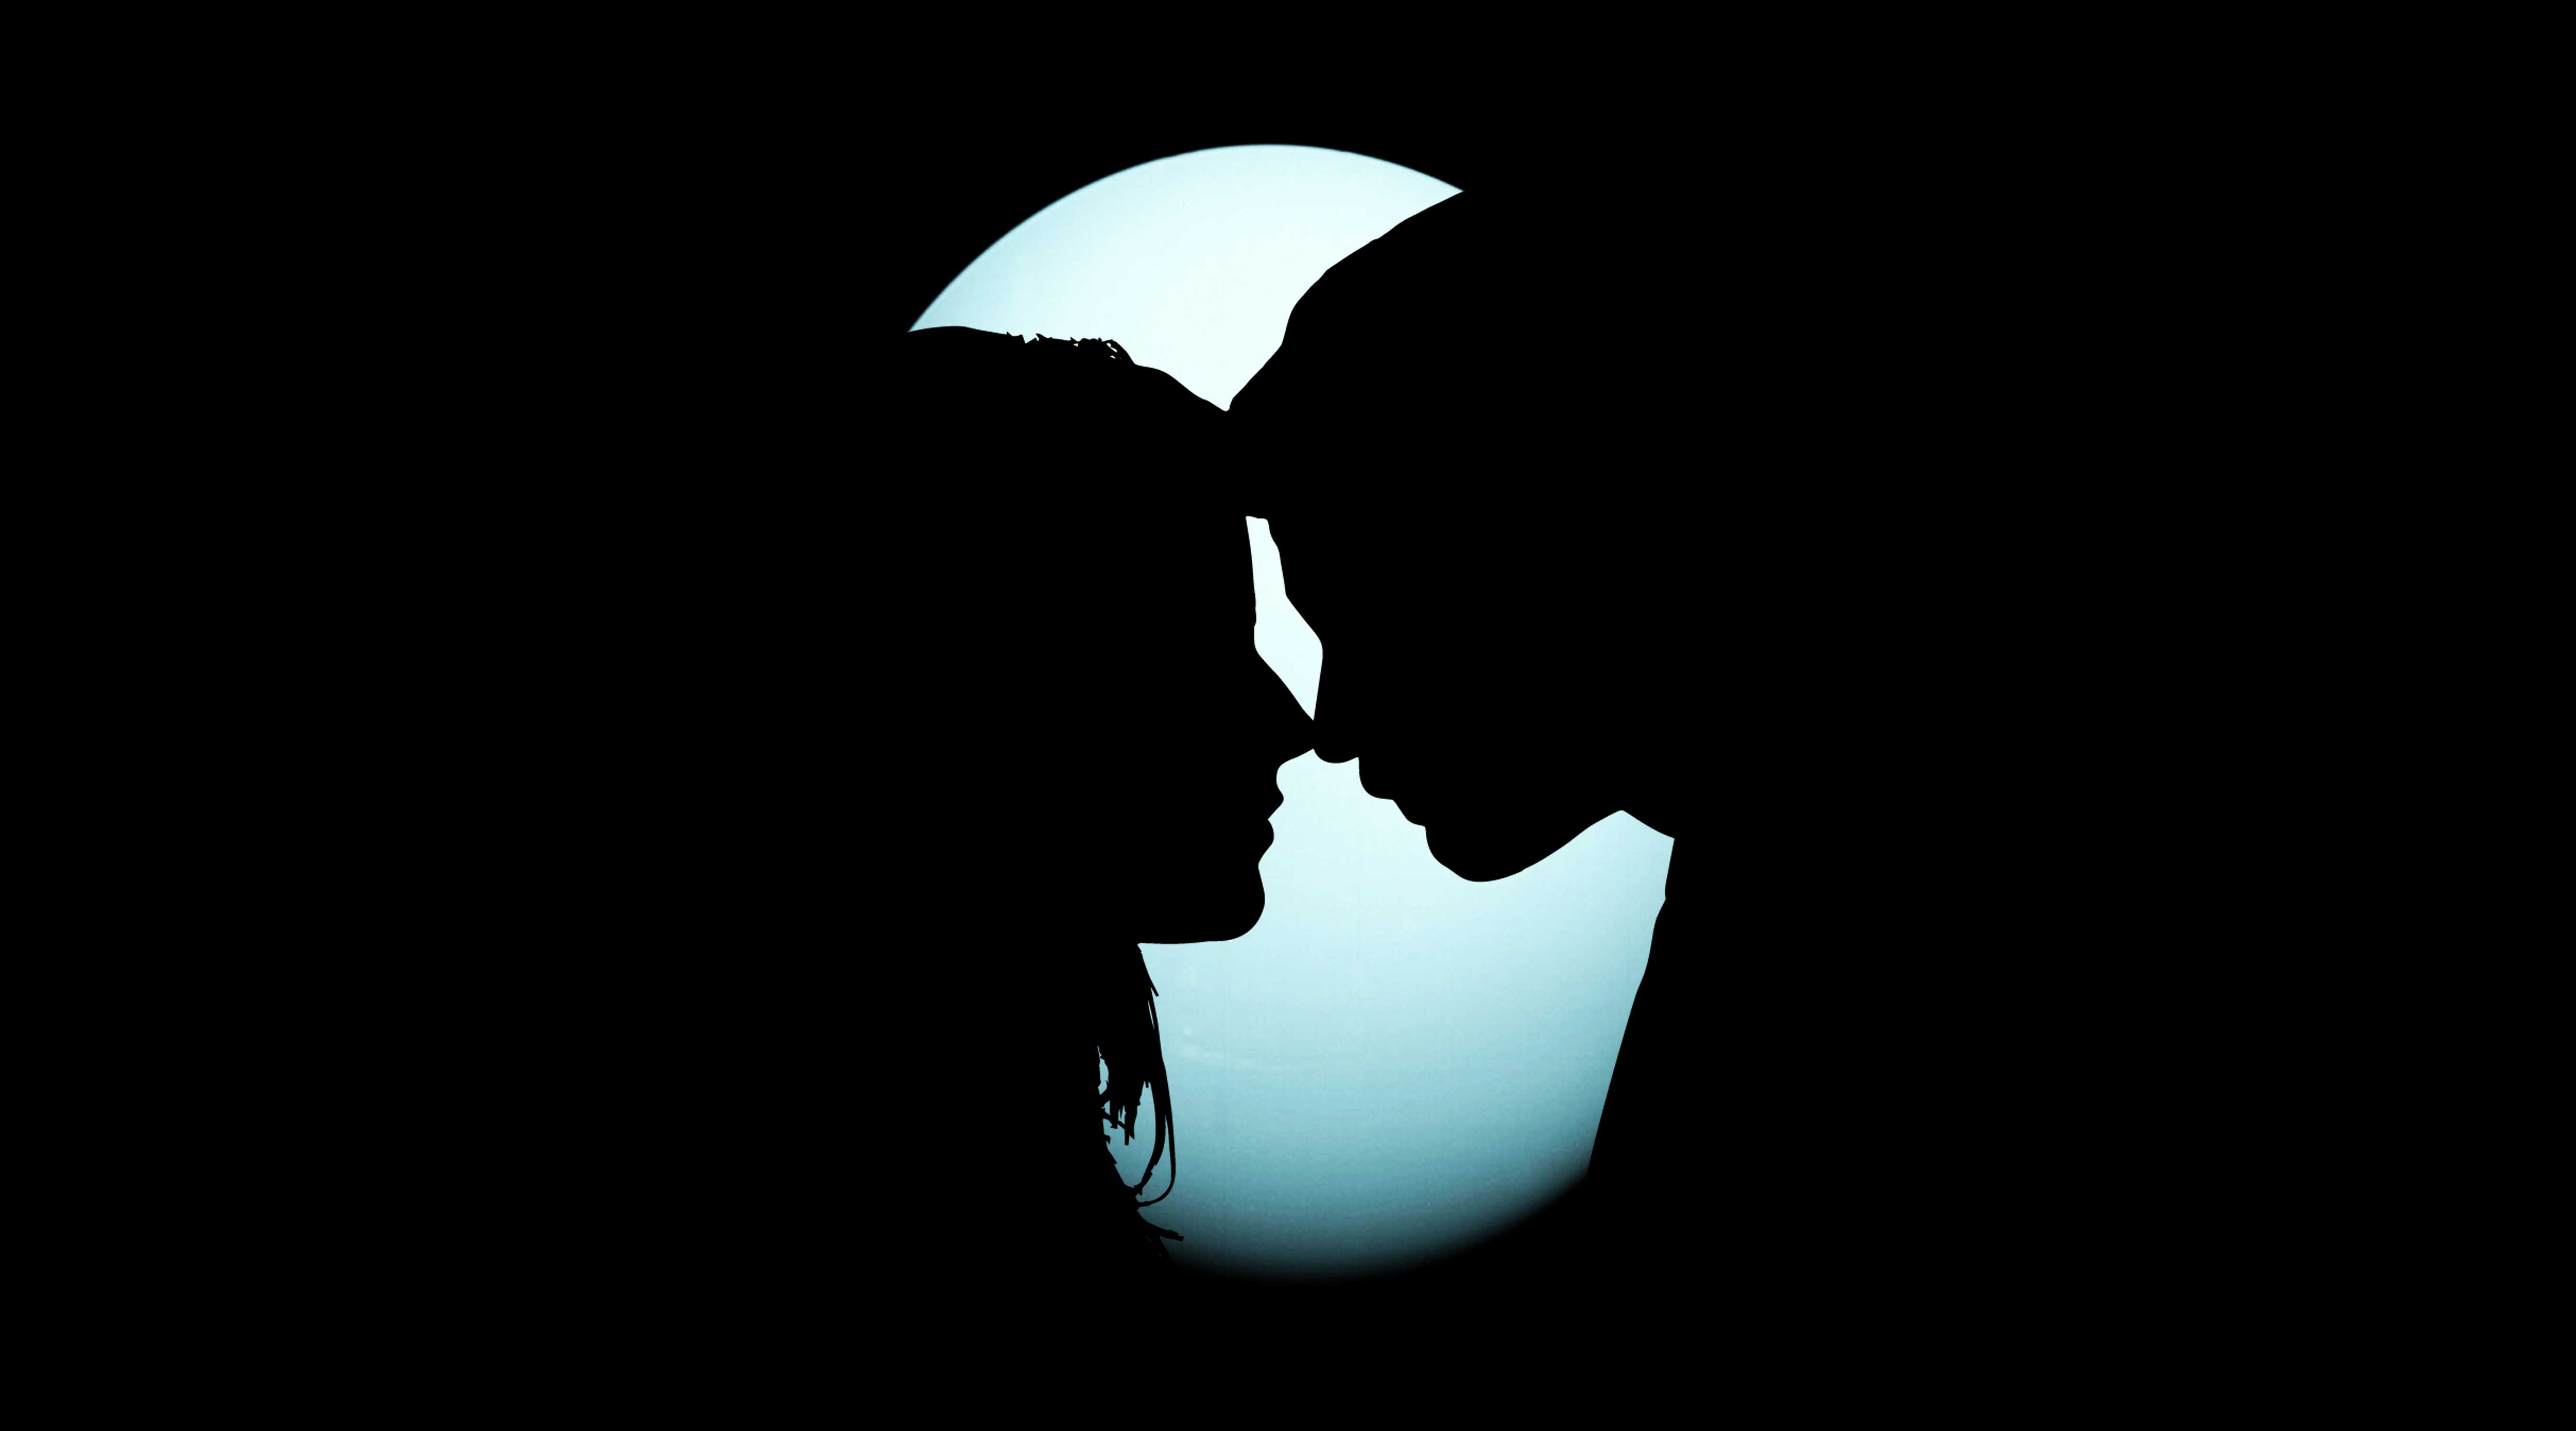 Couple Wallpaper 4K, Silhouette, Together, Romantic, Moon, Black Dark